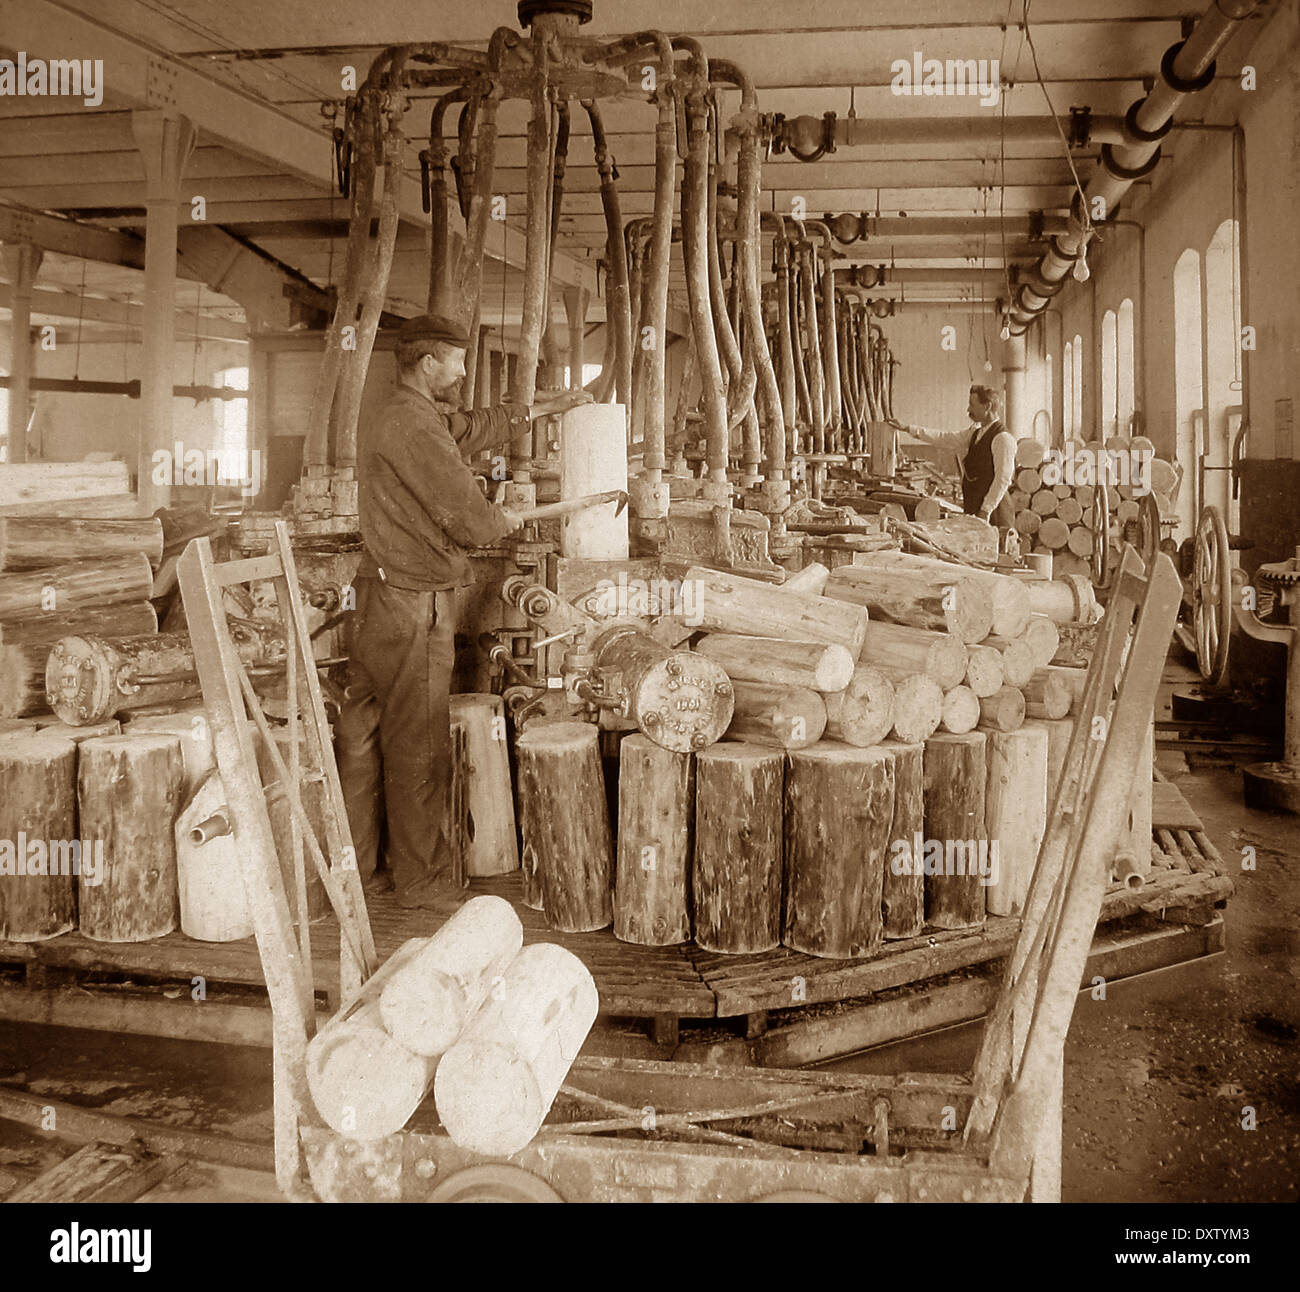 paper mills history